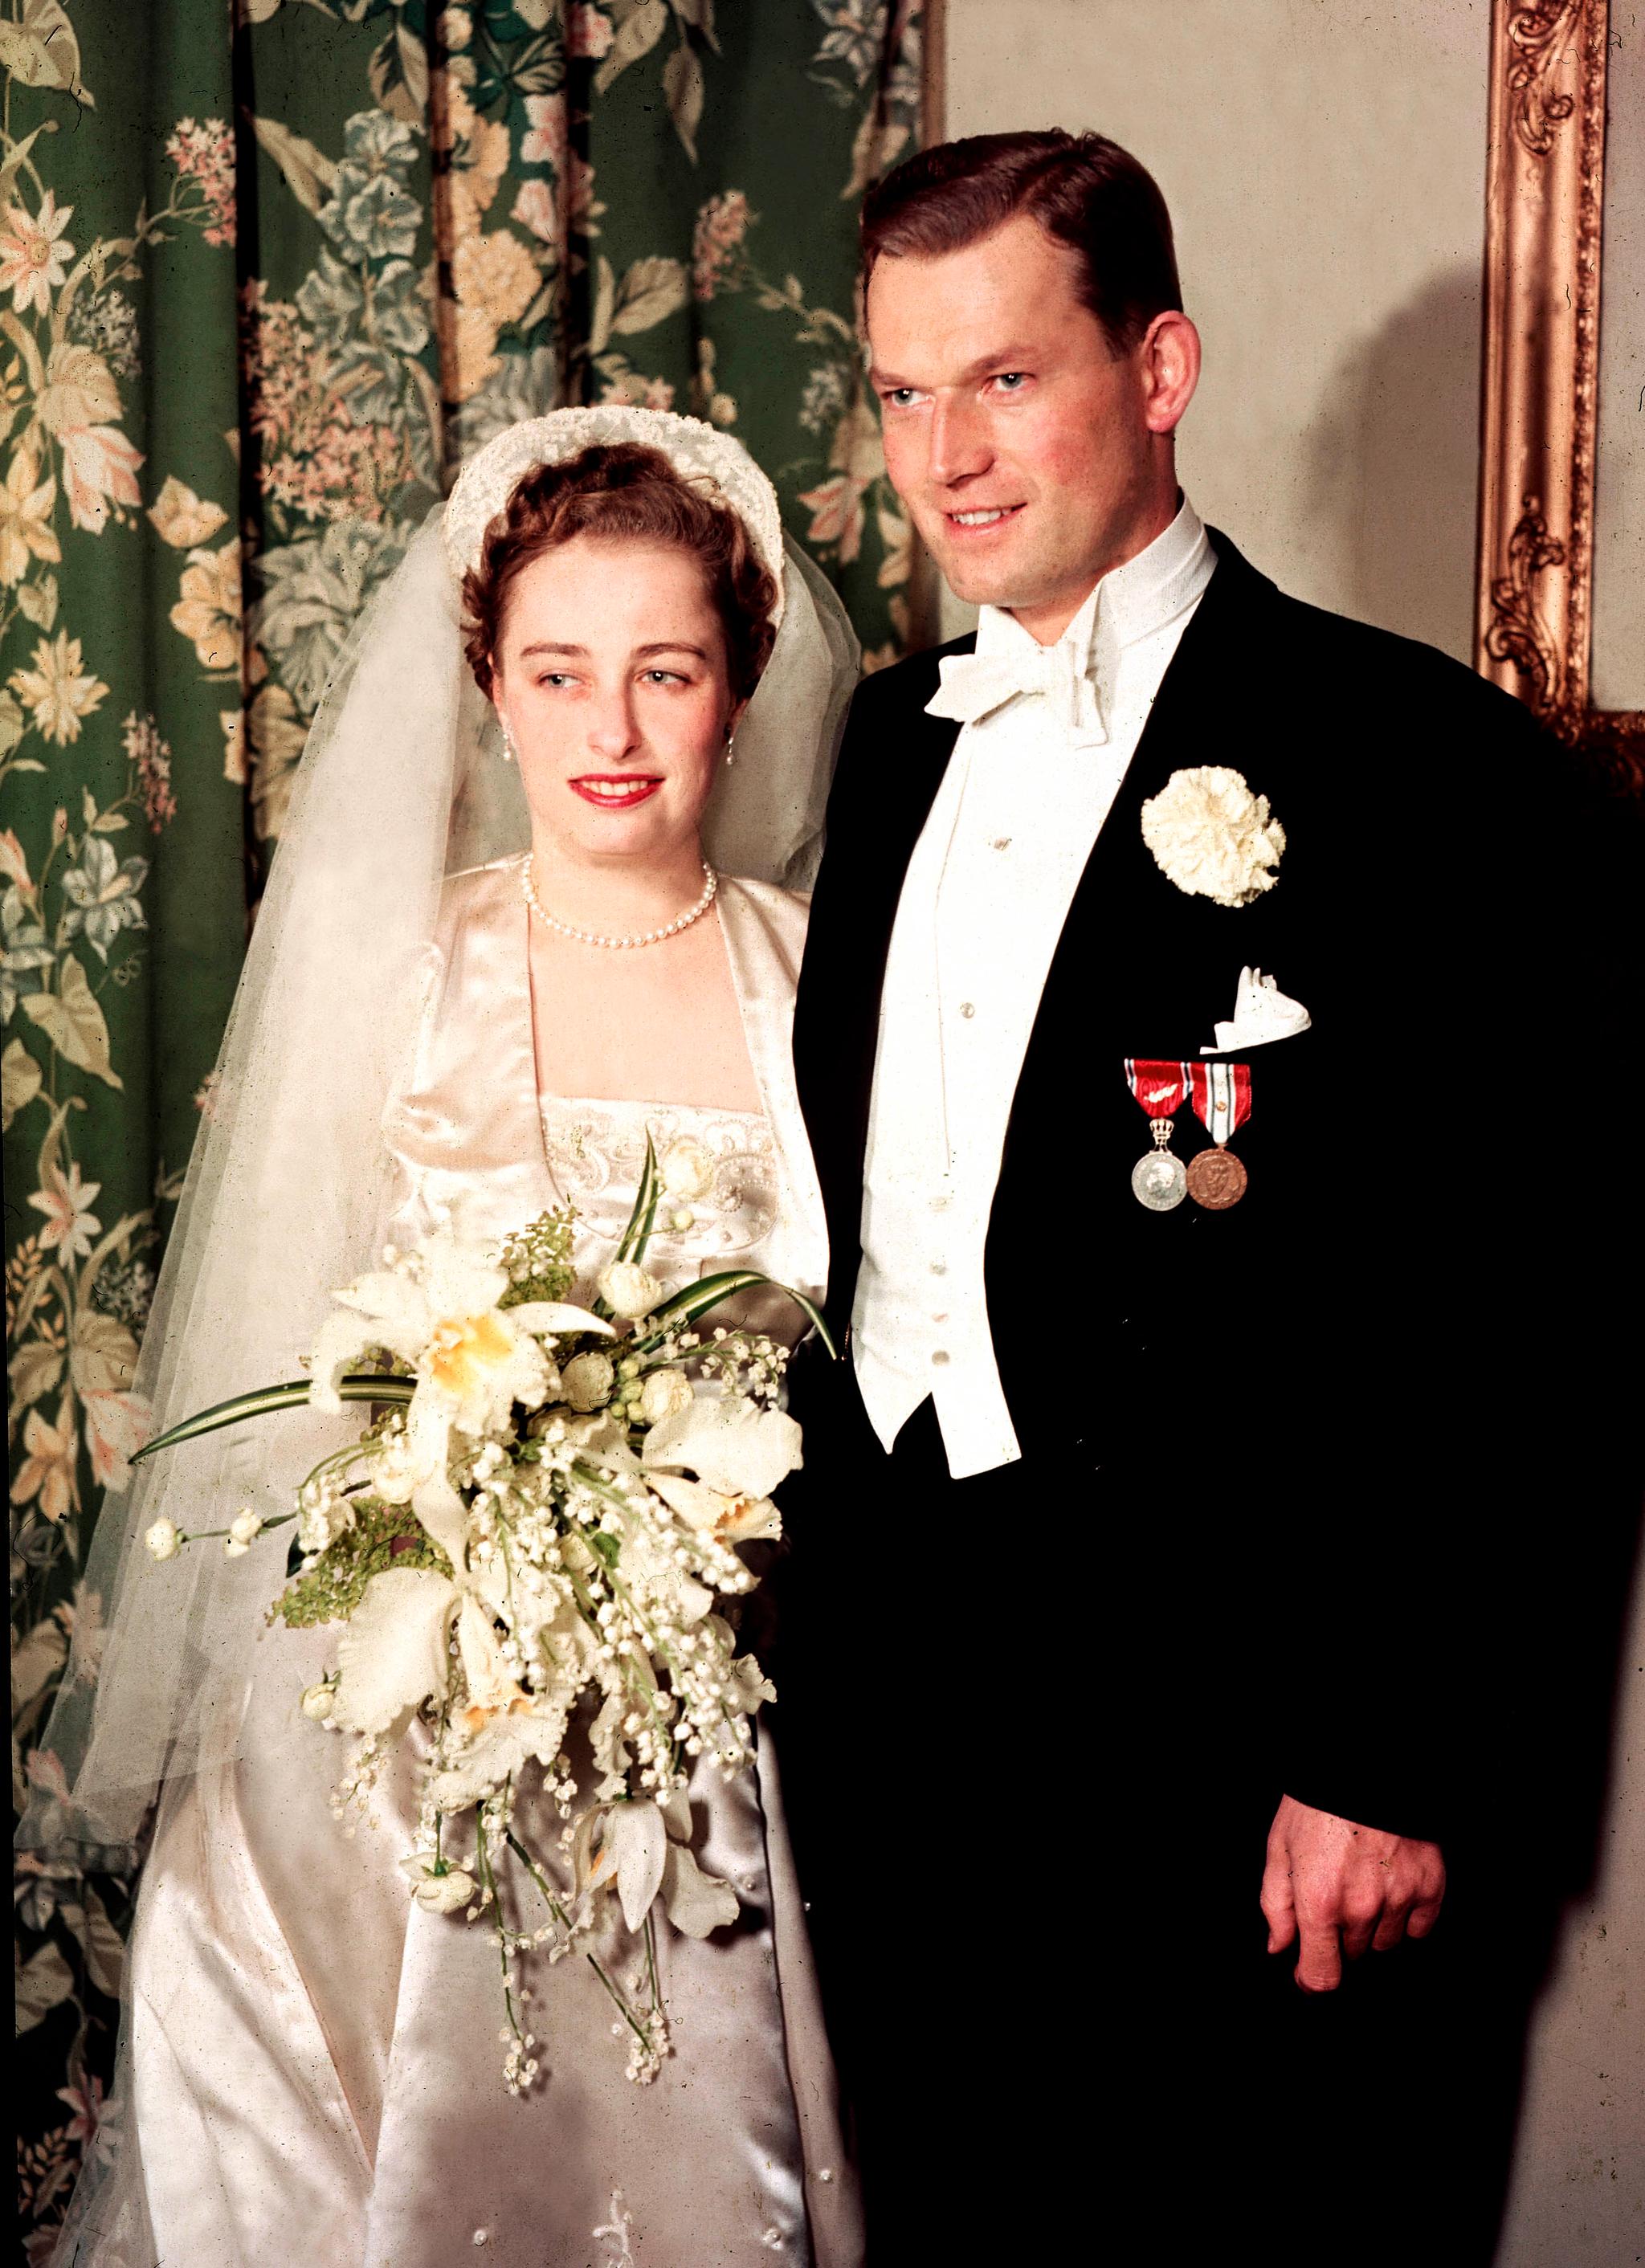 Erling Lorentzen og prinsesse Ragnhild, kong Olav Vs eldste datter, giftet seg i 1953. Prinsesse Ragnhild, fru Lorentzen døde i 2012.